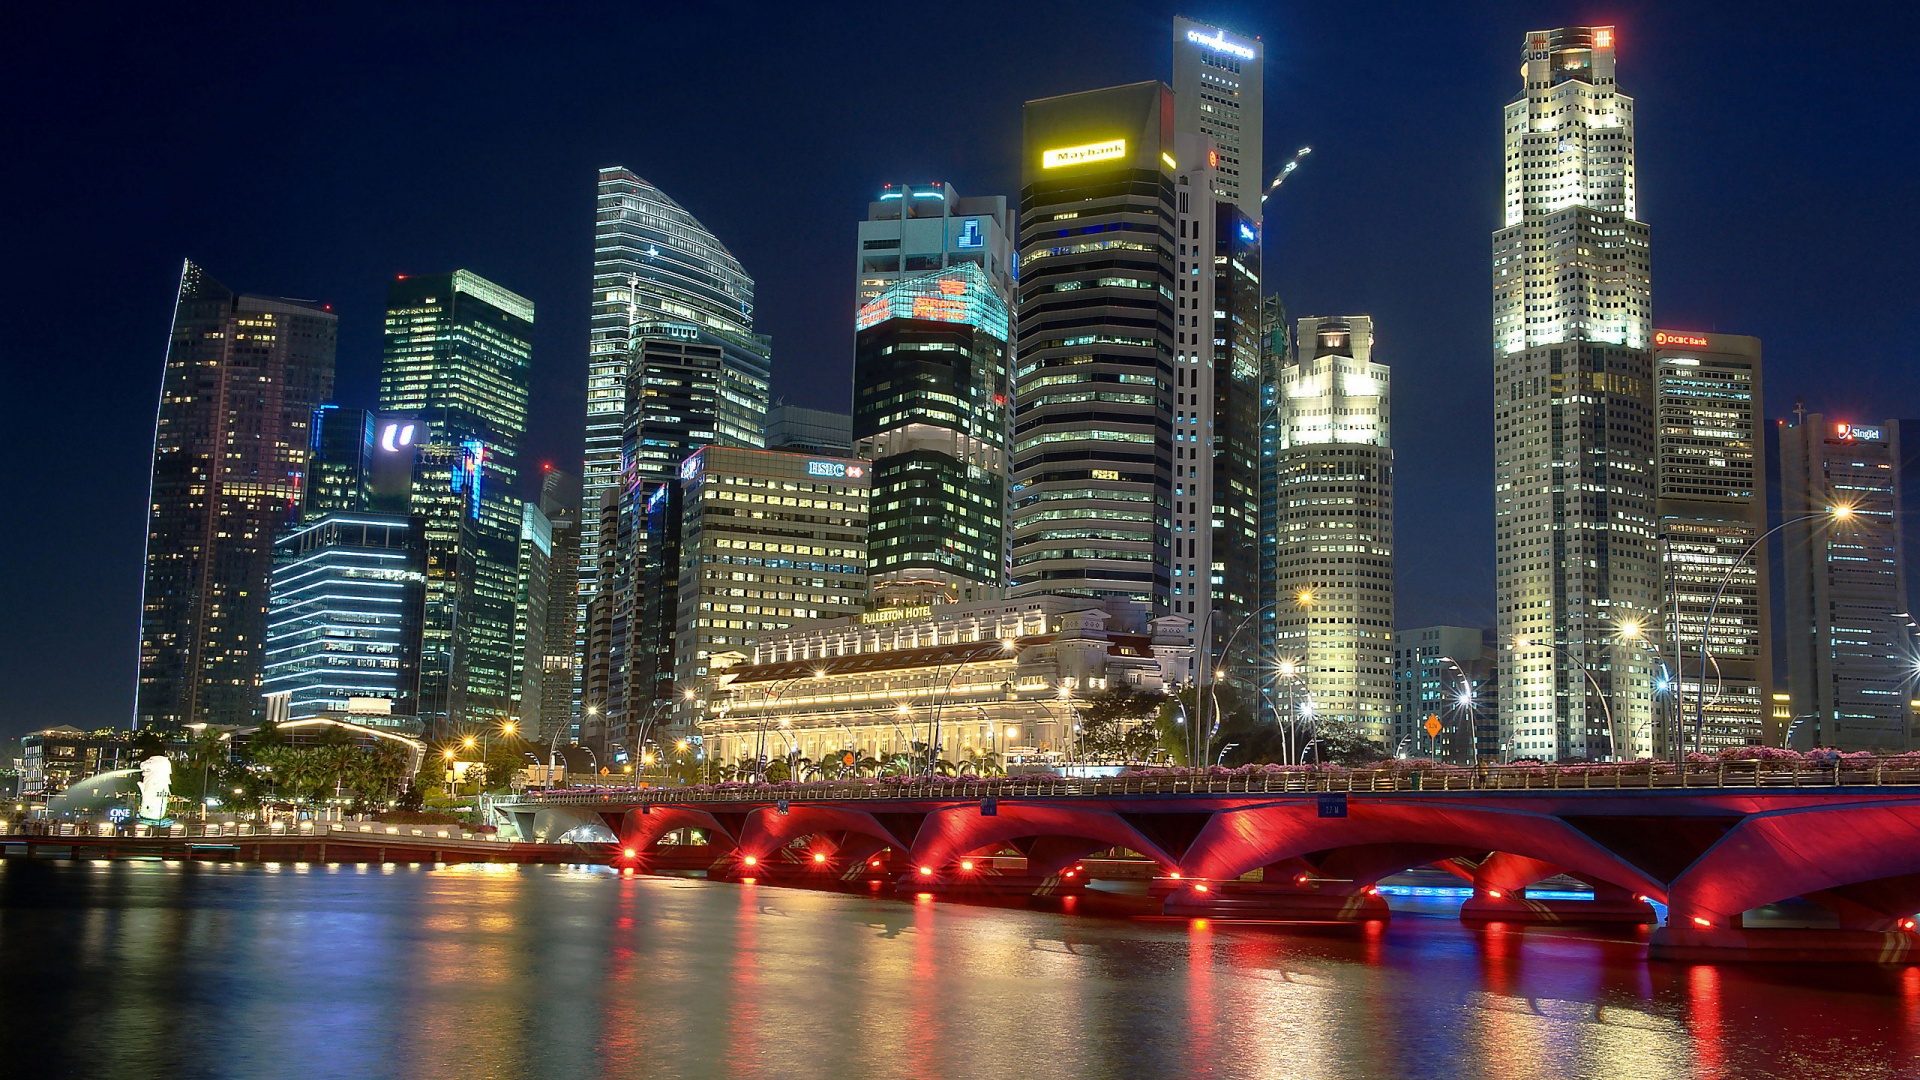 Singapore Night Skyline Windows 81 Theme and Desktop All for